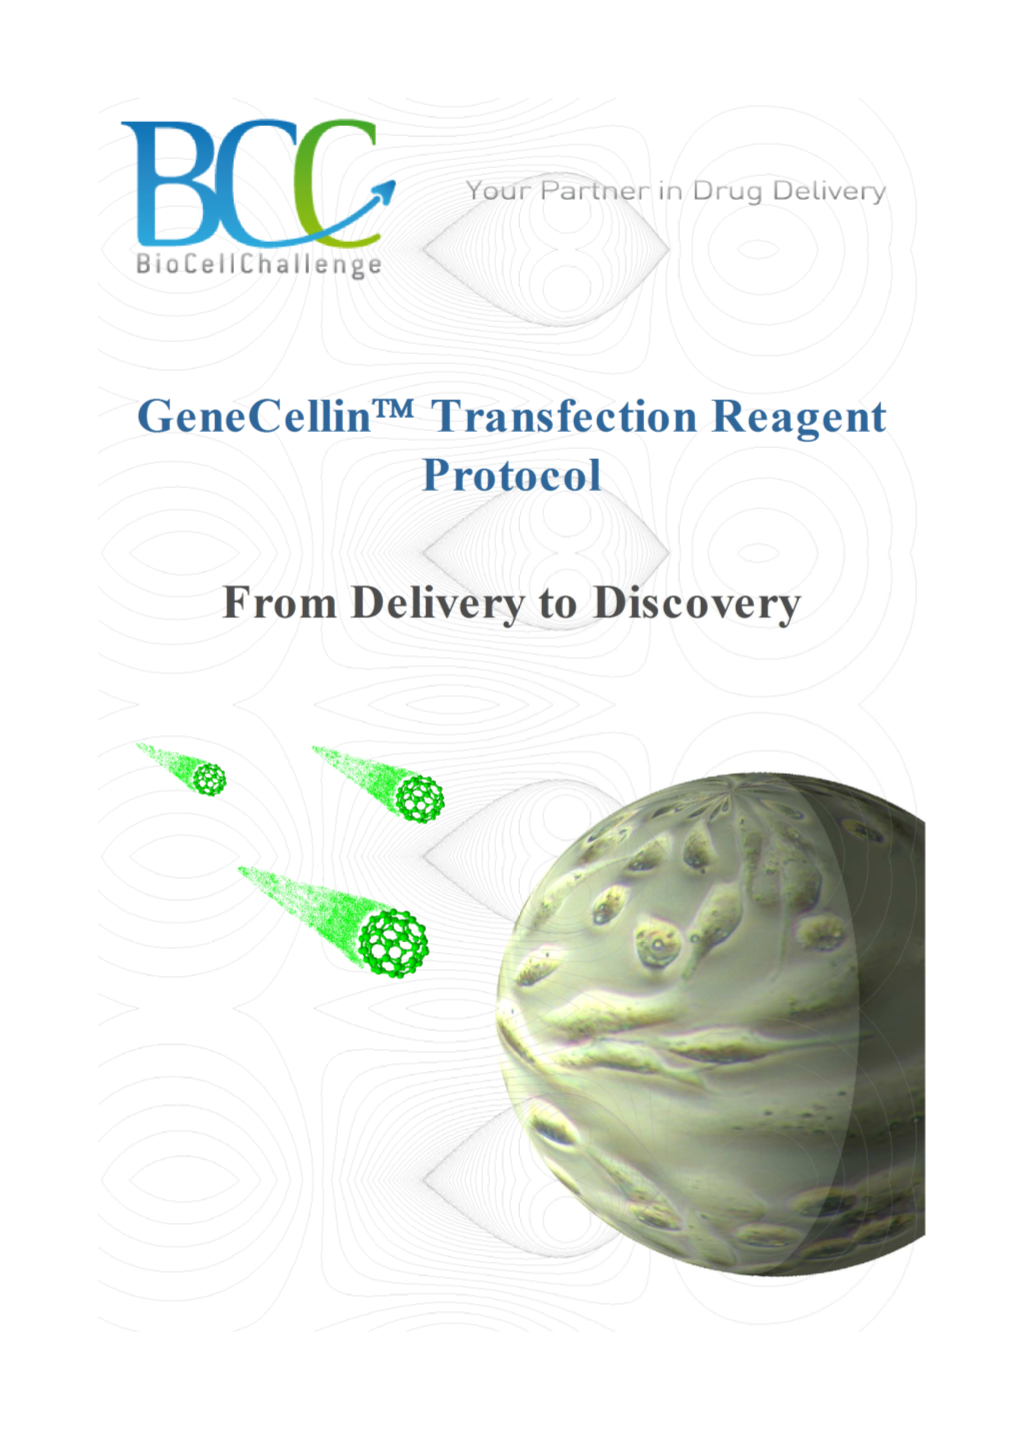 Genecellintm Transfection Reagent Protocol